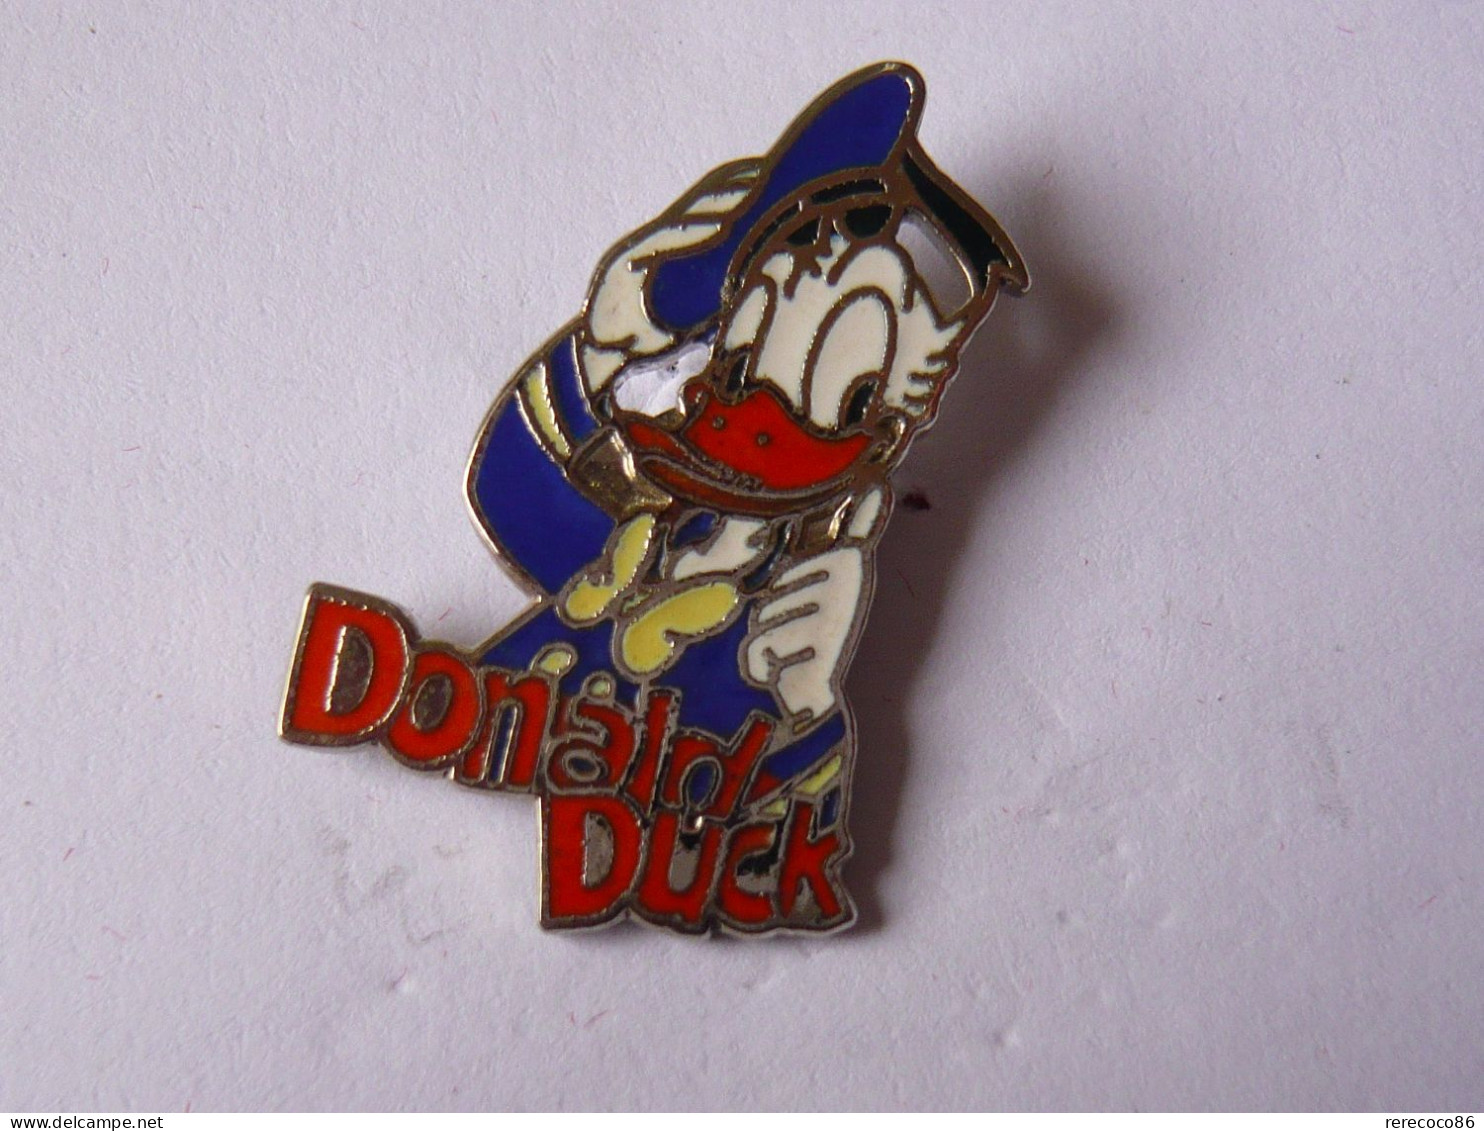 Pin S DISNEY DONALD DUCK TBQ - Disney